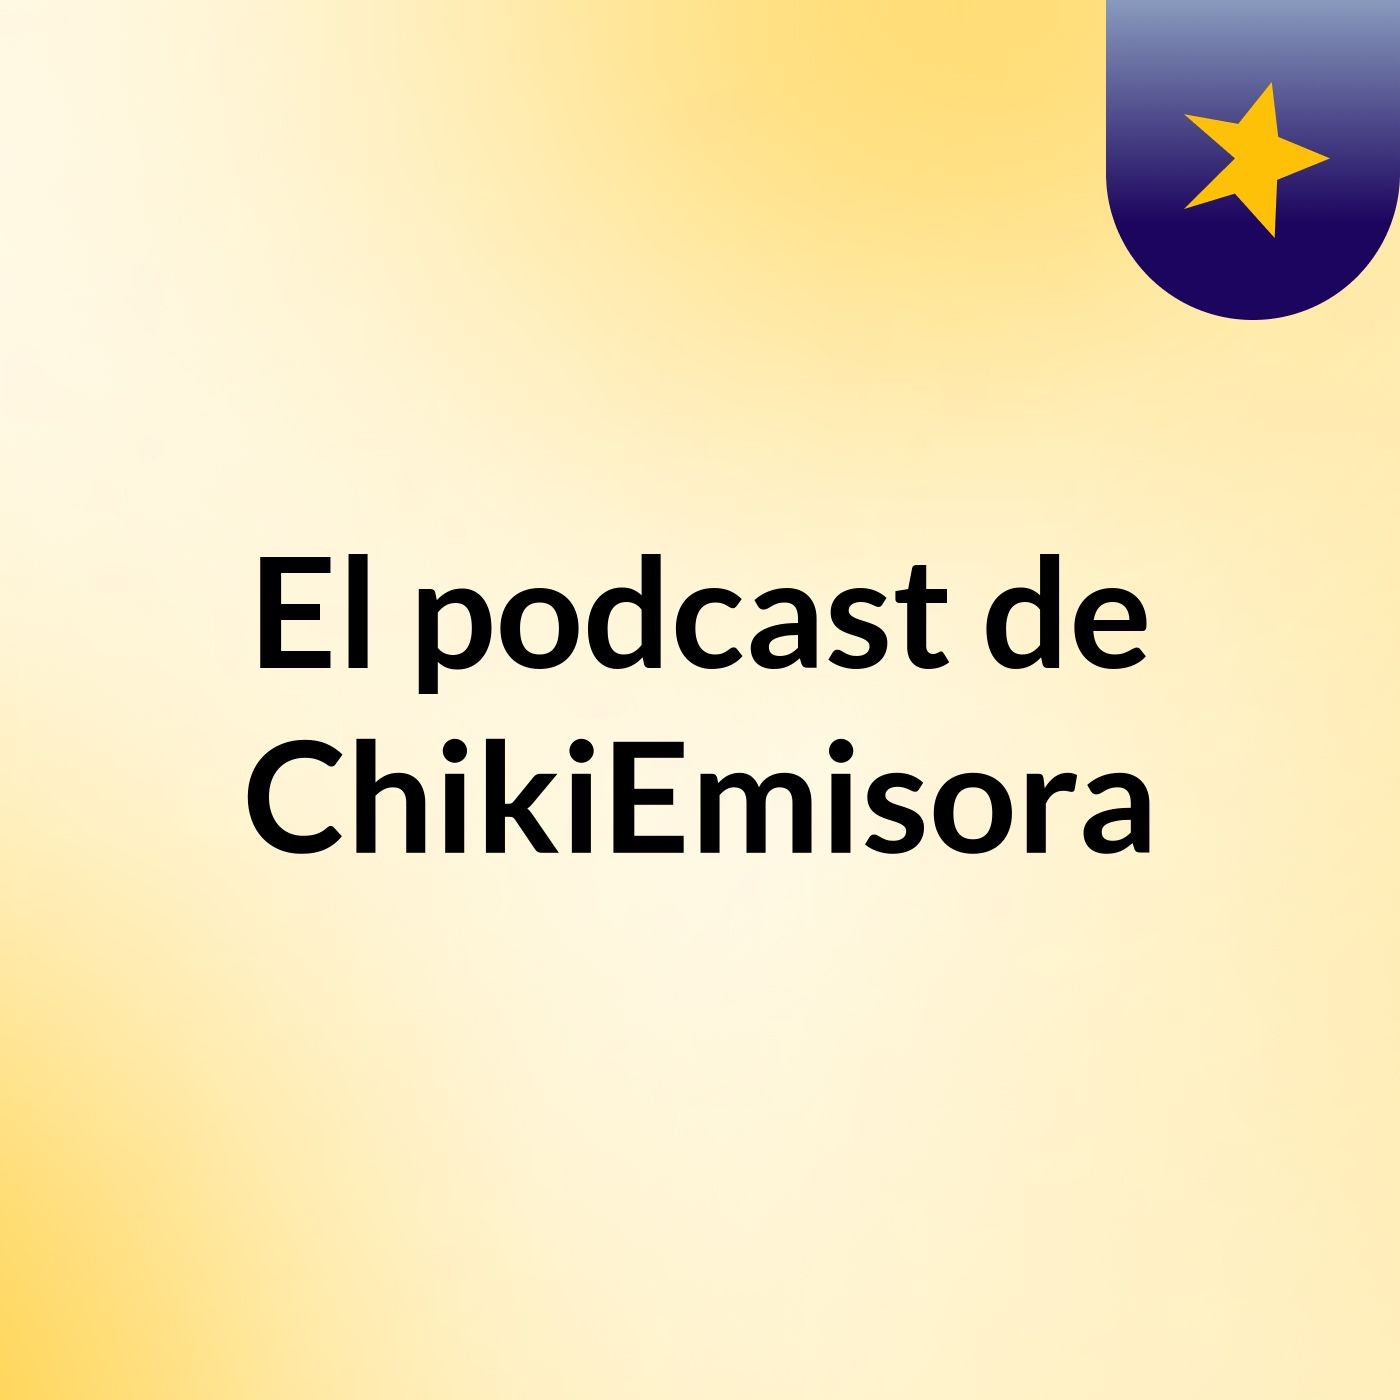 El podcast de ChikiEmisora